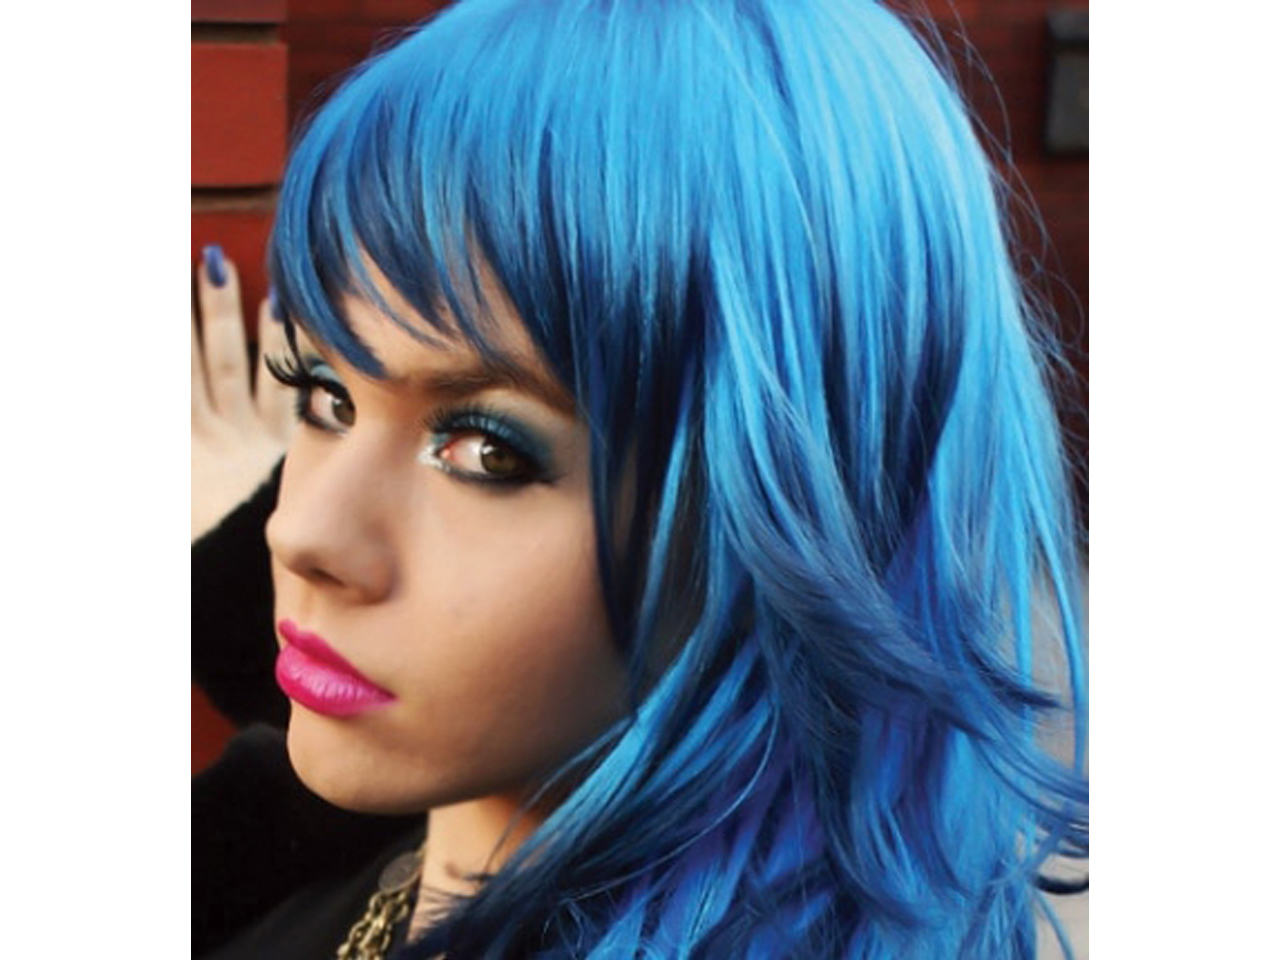 3. Lagoon Blue Hair Dye Kit - wide 5